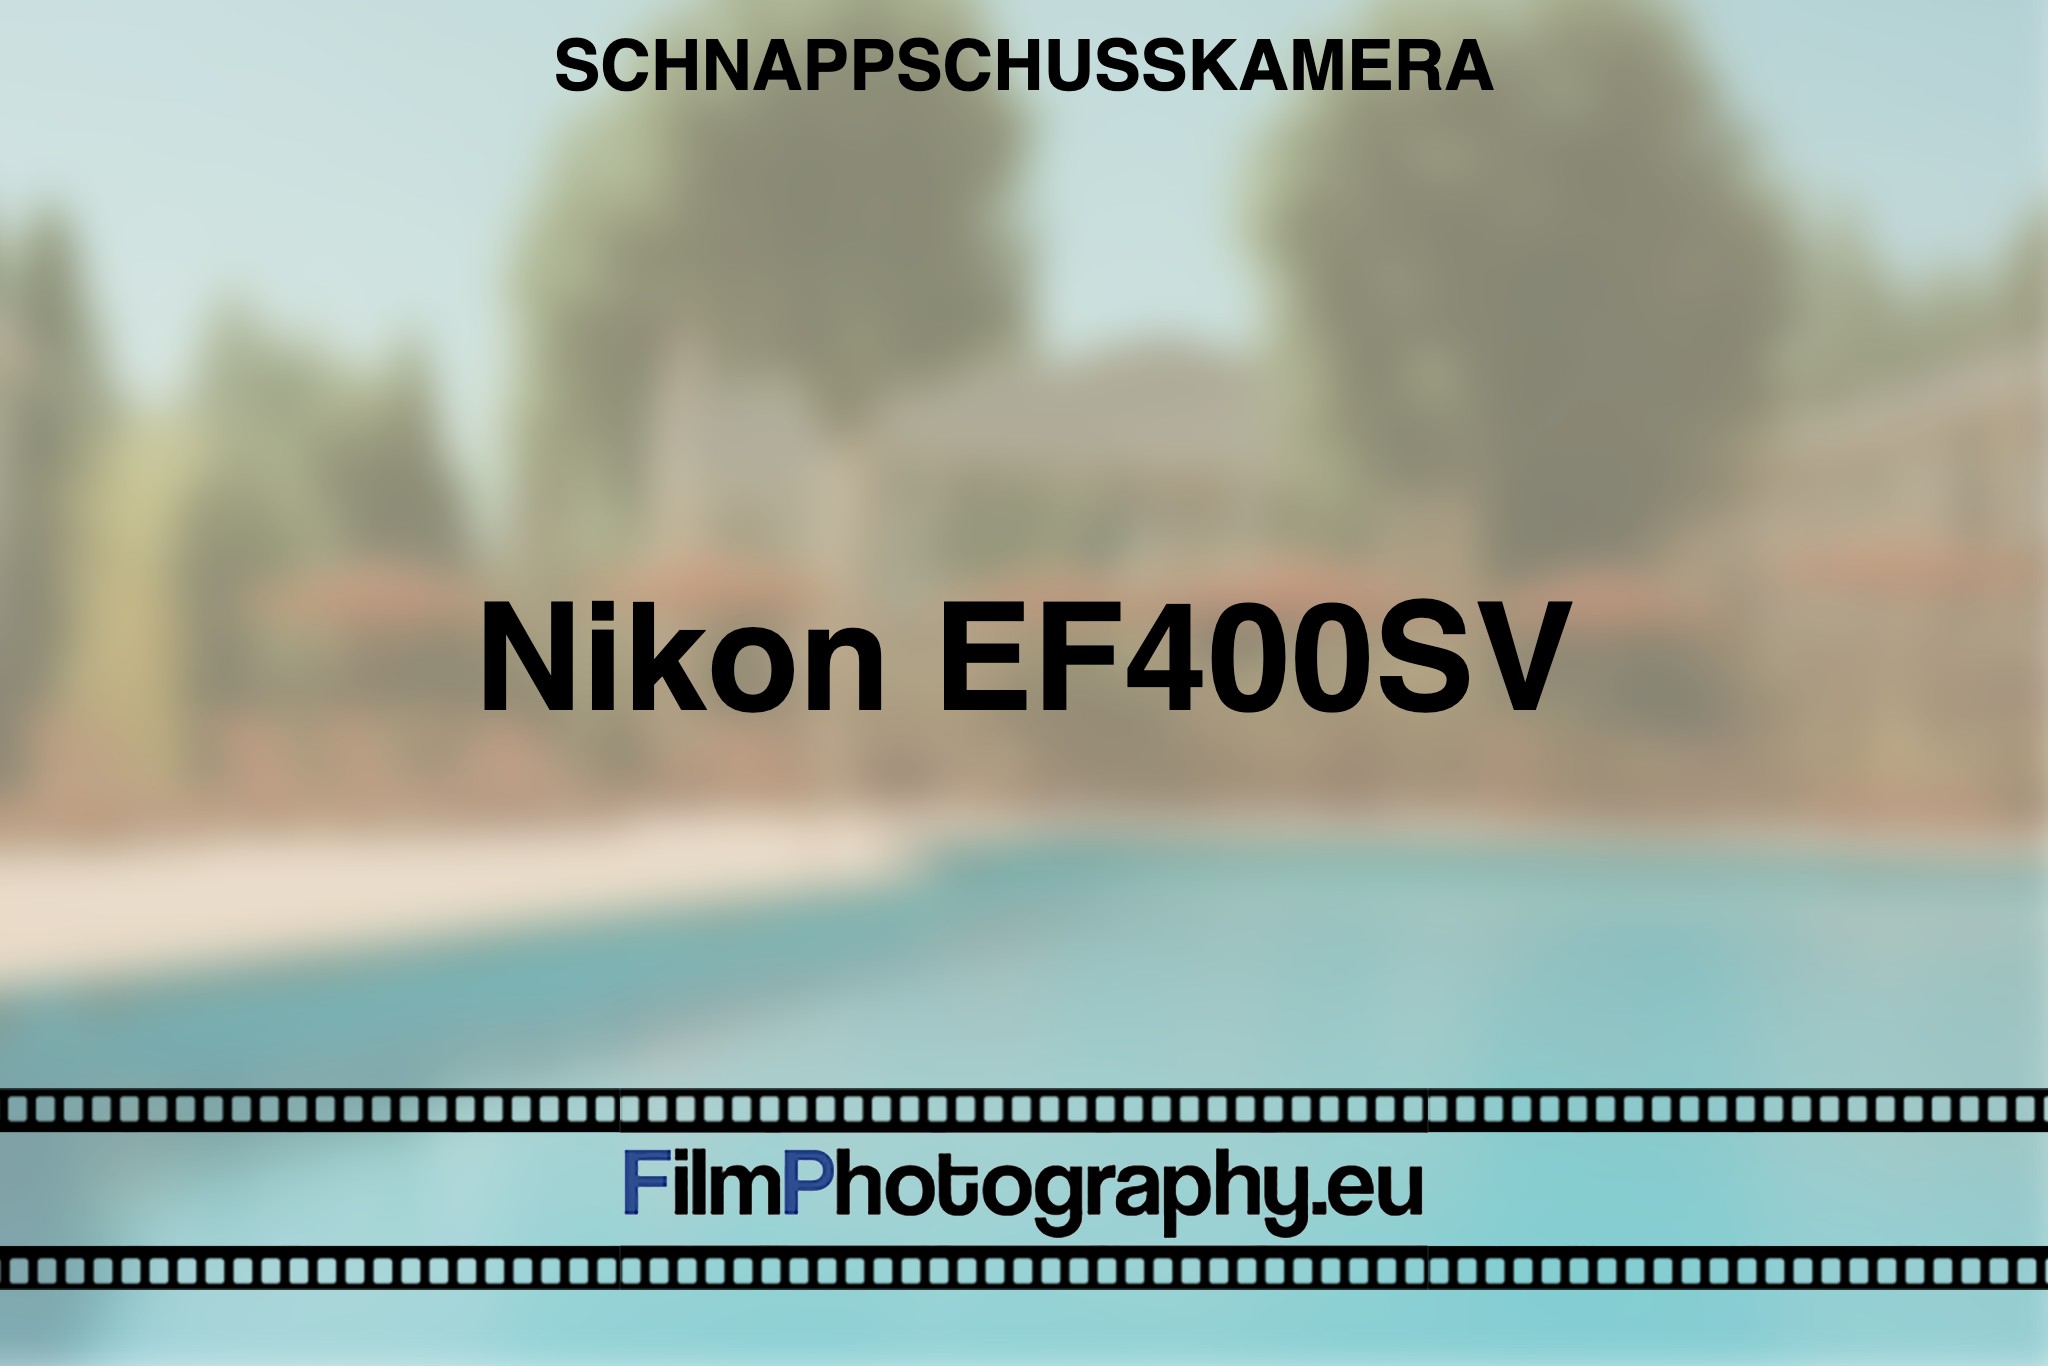 nikon-ef400sv-schnappschusskamera-bnv